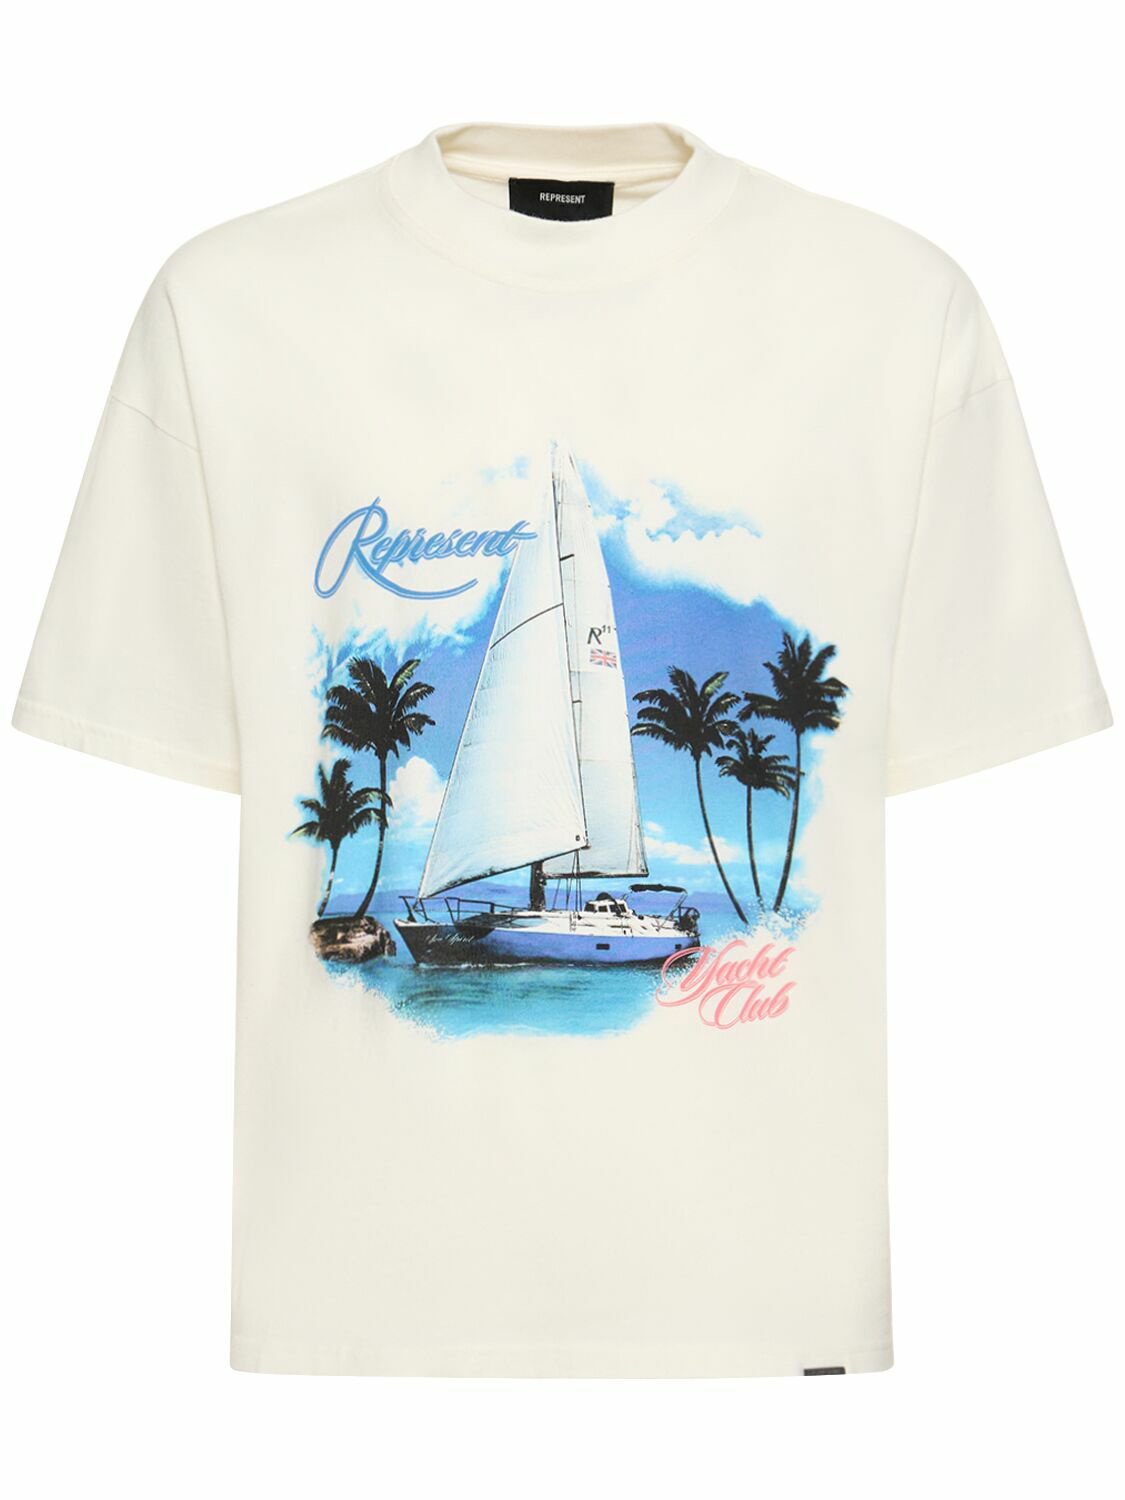 REPRESENT - Yacht Club T-shirt Represent